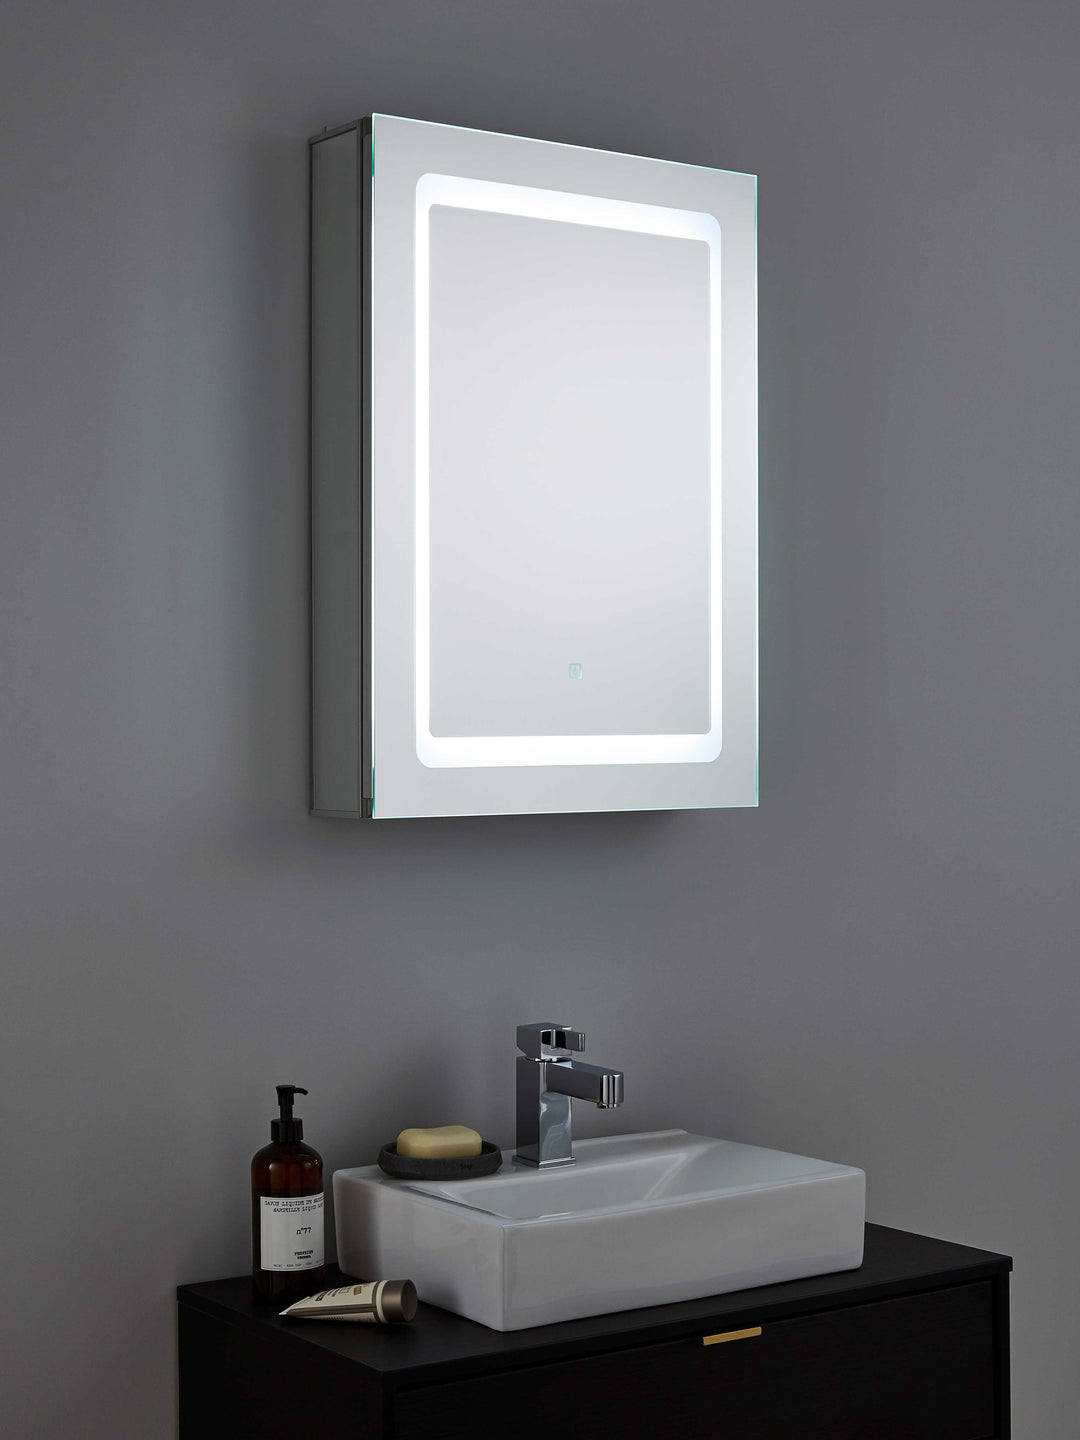 Illuminated LED Bathroom Mirror Cabinet